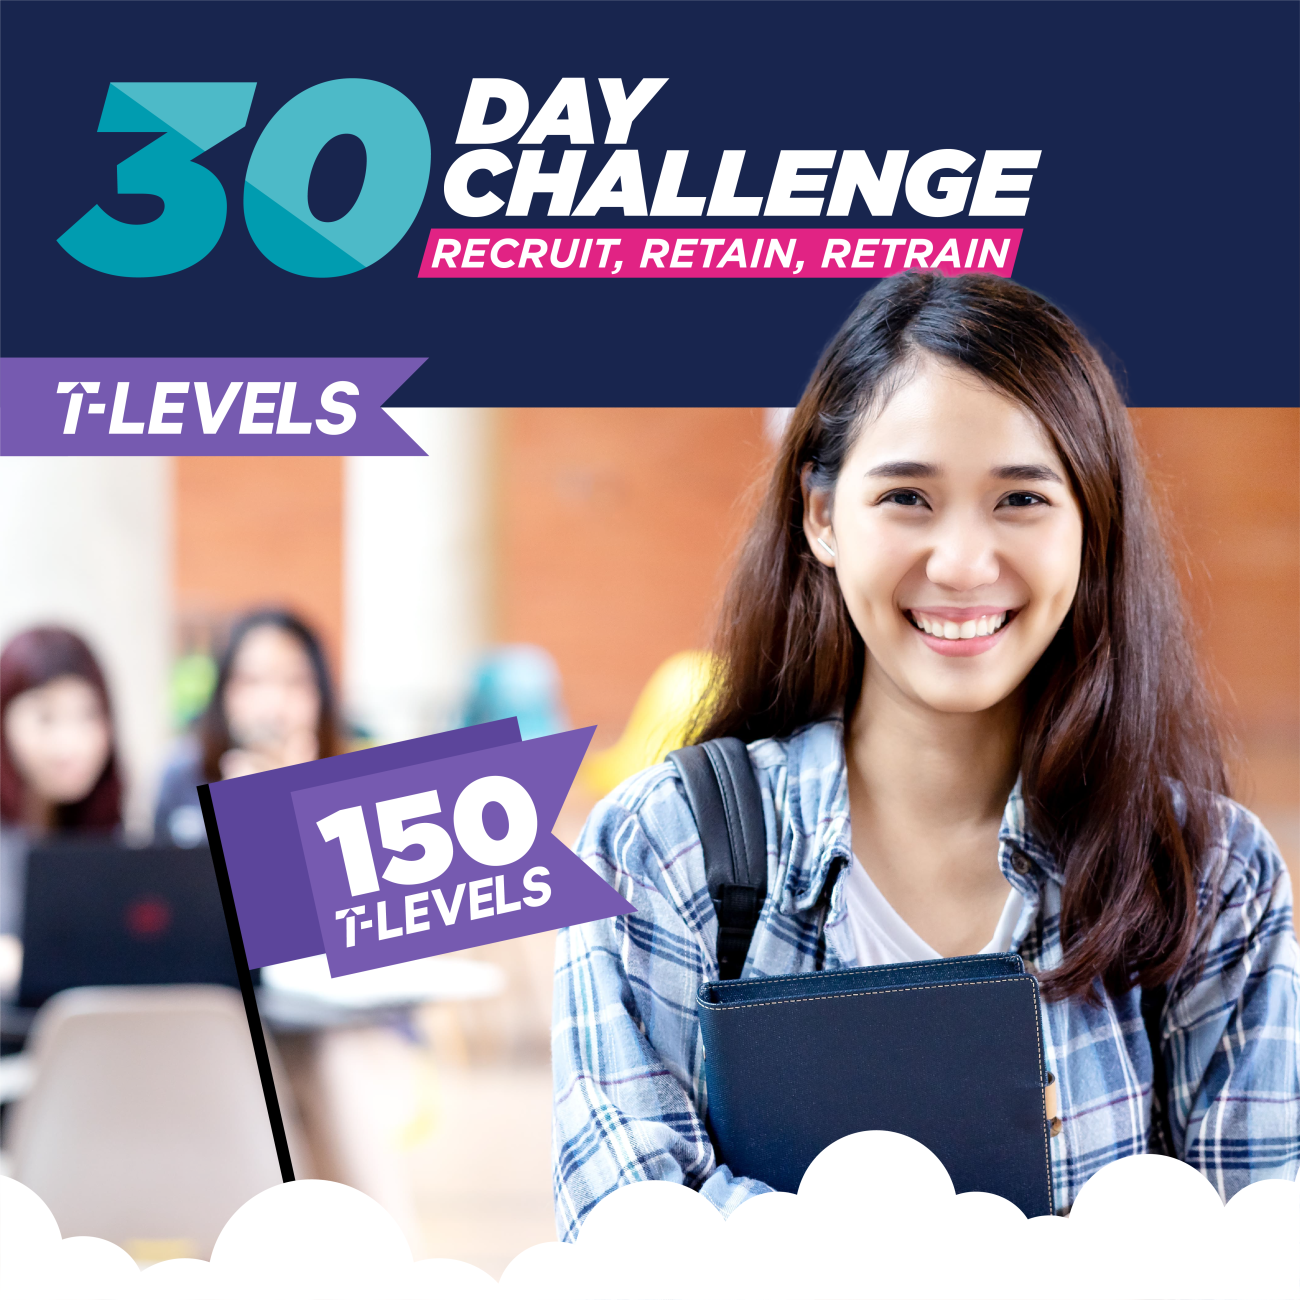 30 day challenge graphic